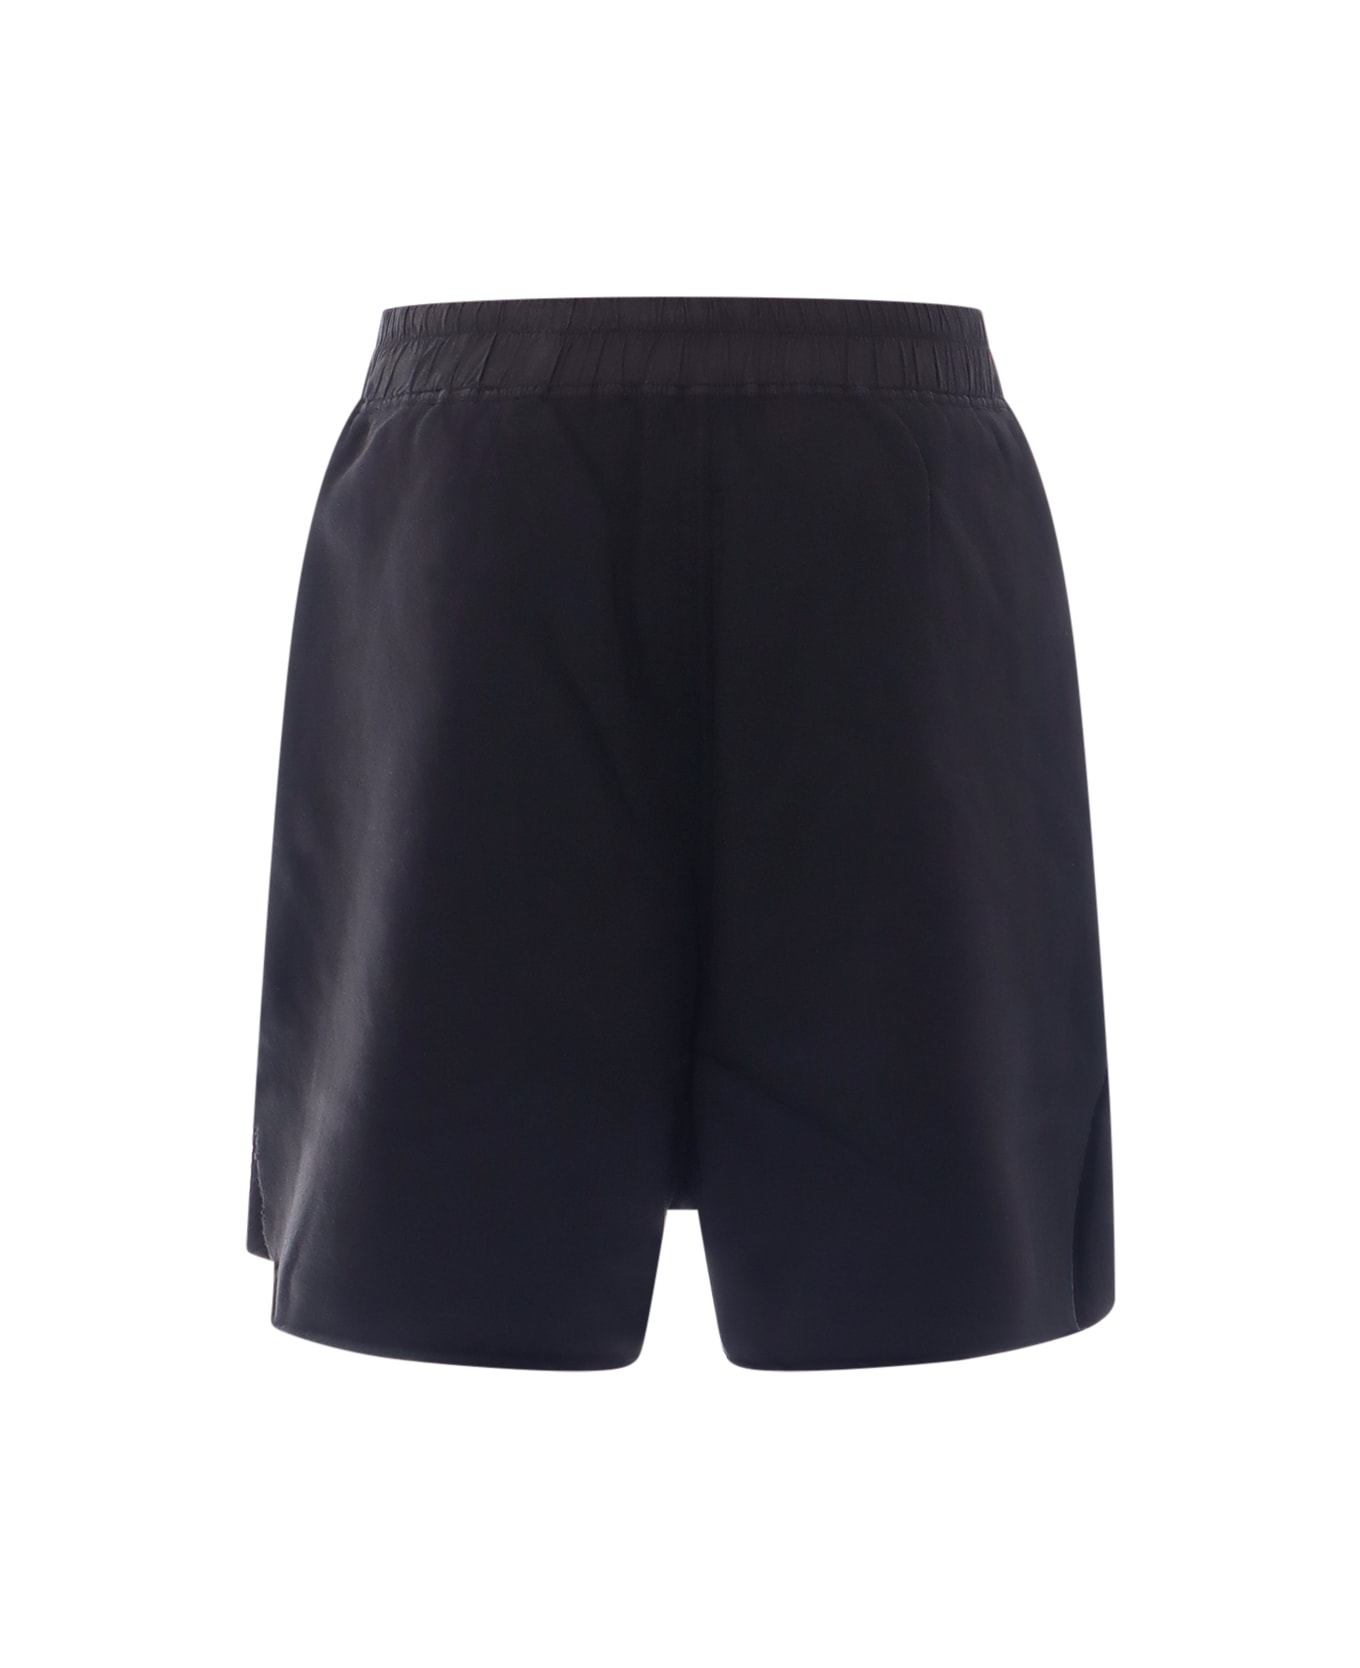 DRKSHDW Bermuda Shorts - Black